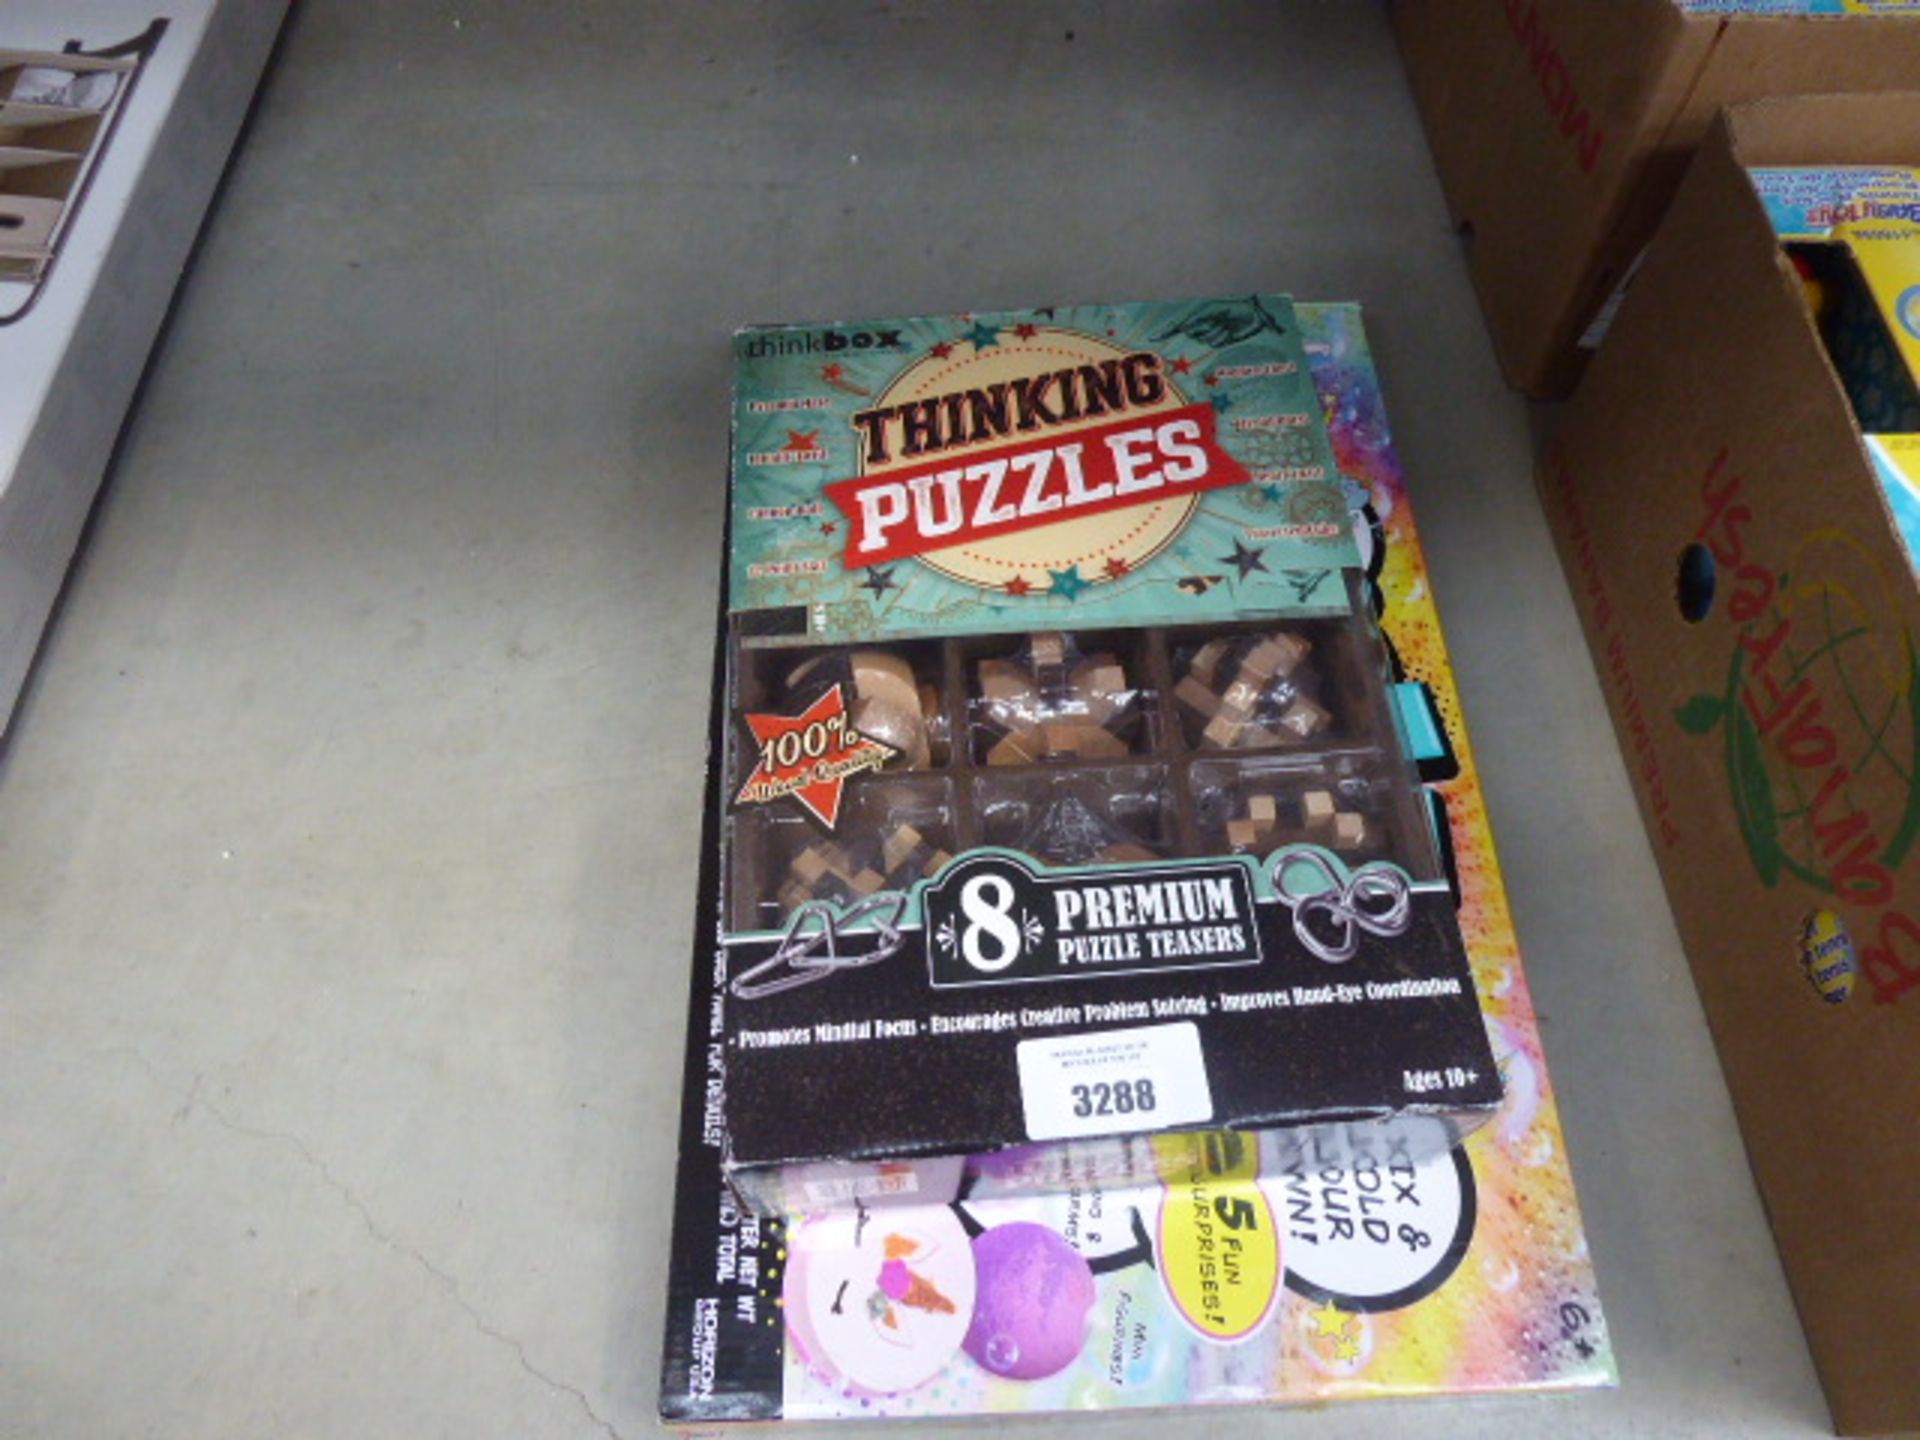 Thinking puzzle set and Pop Fizz set